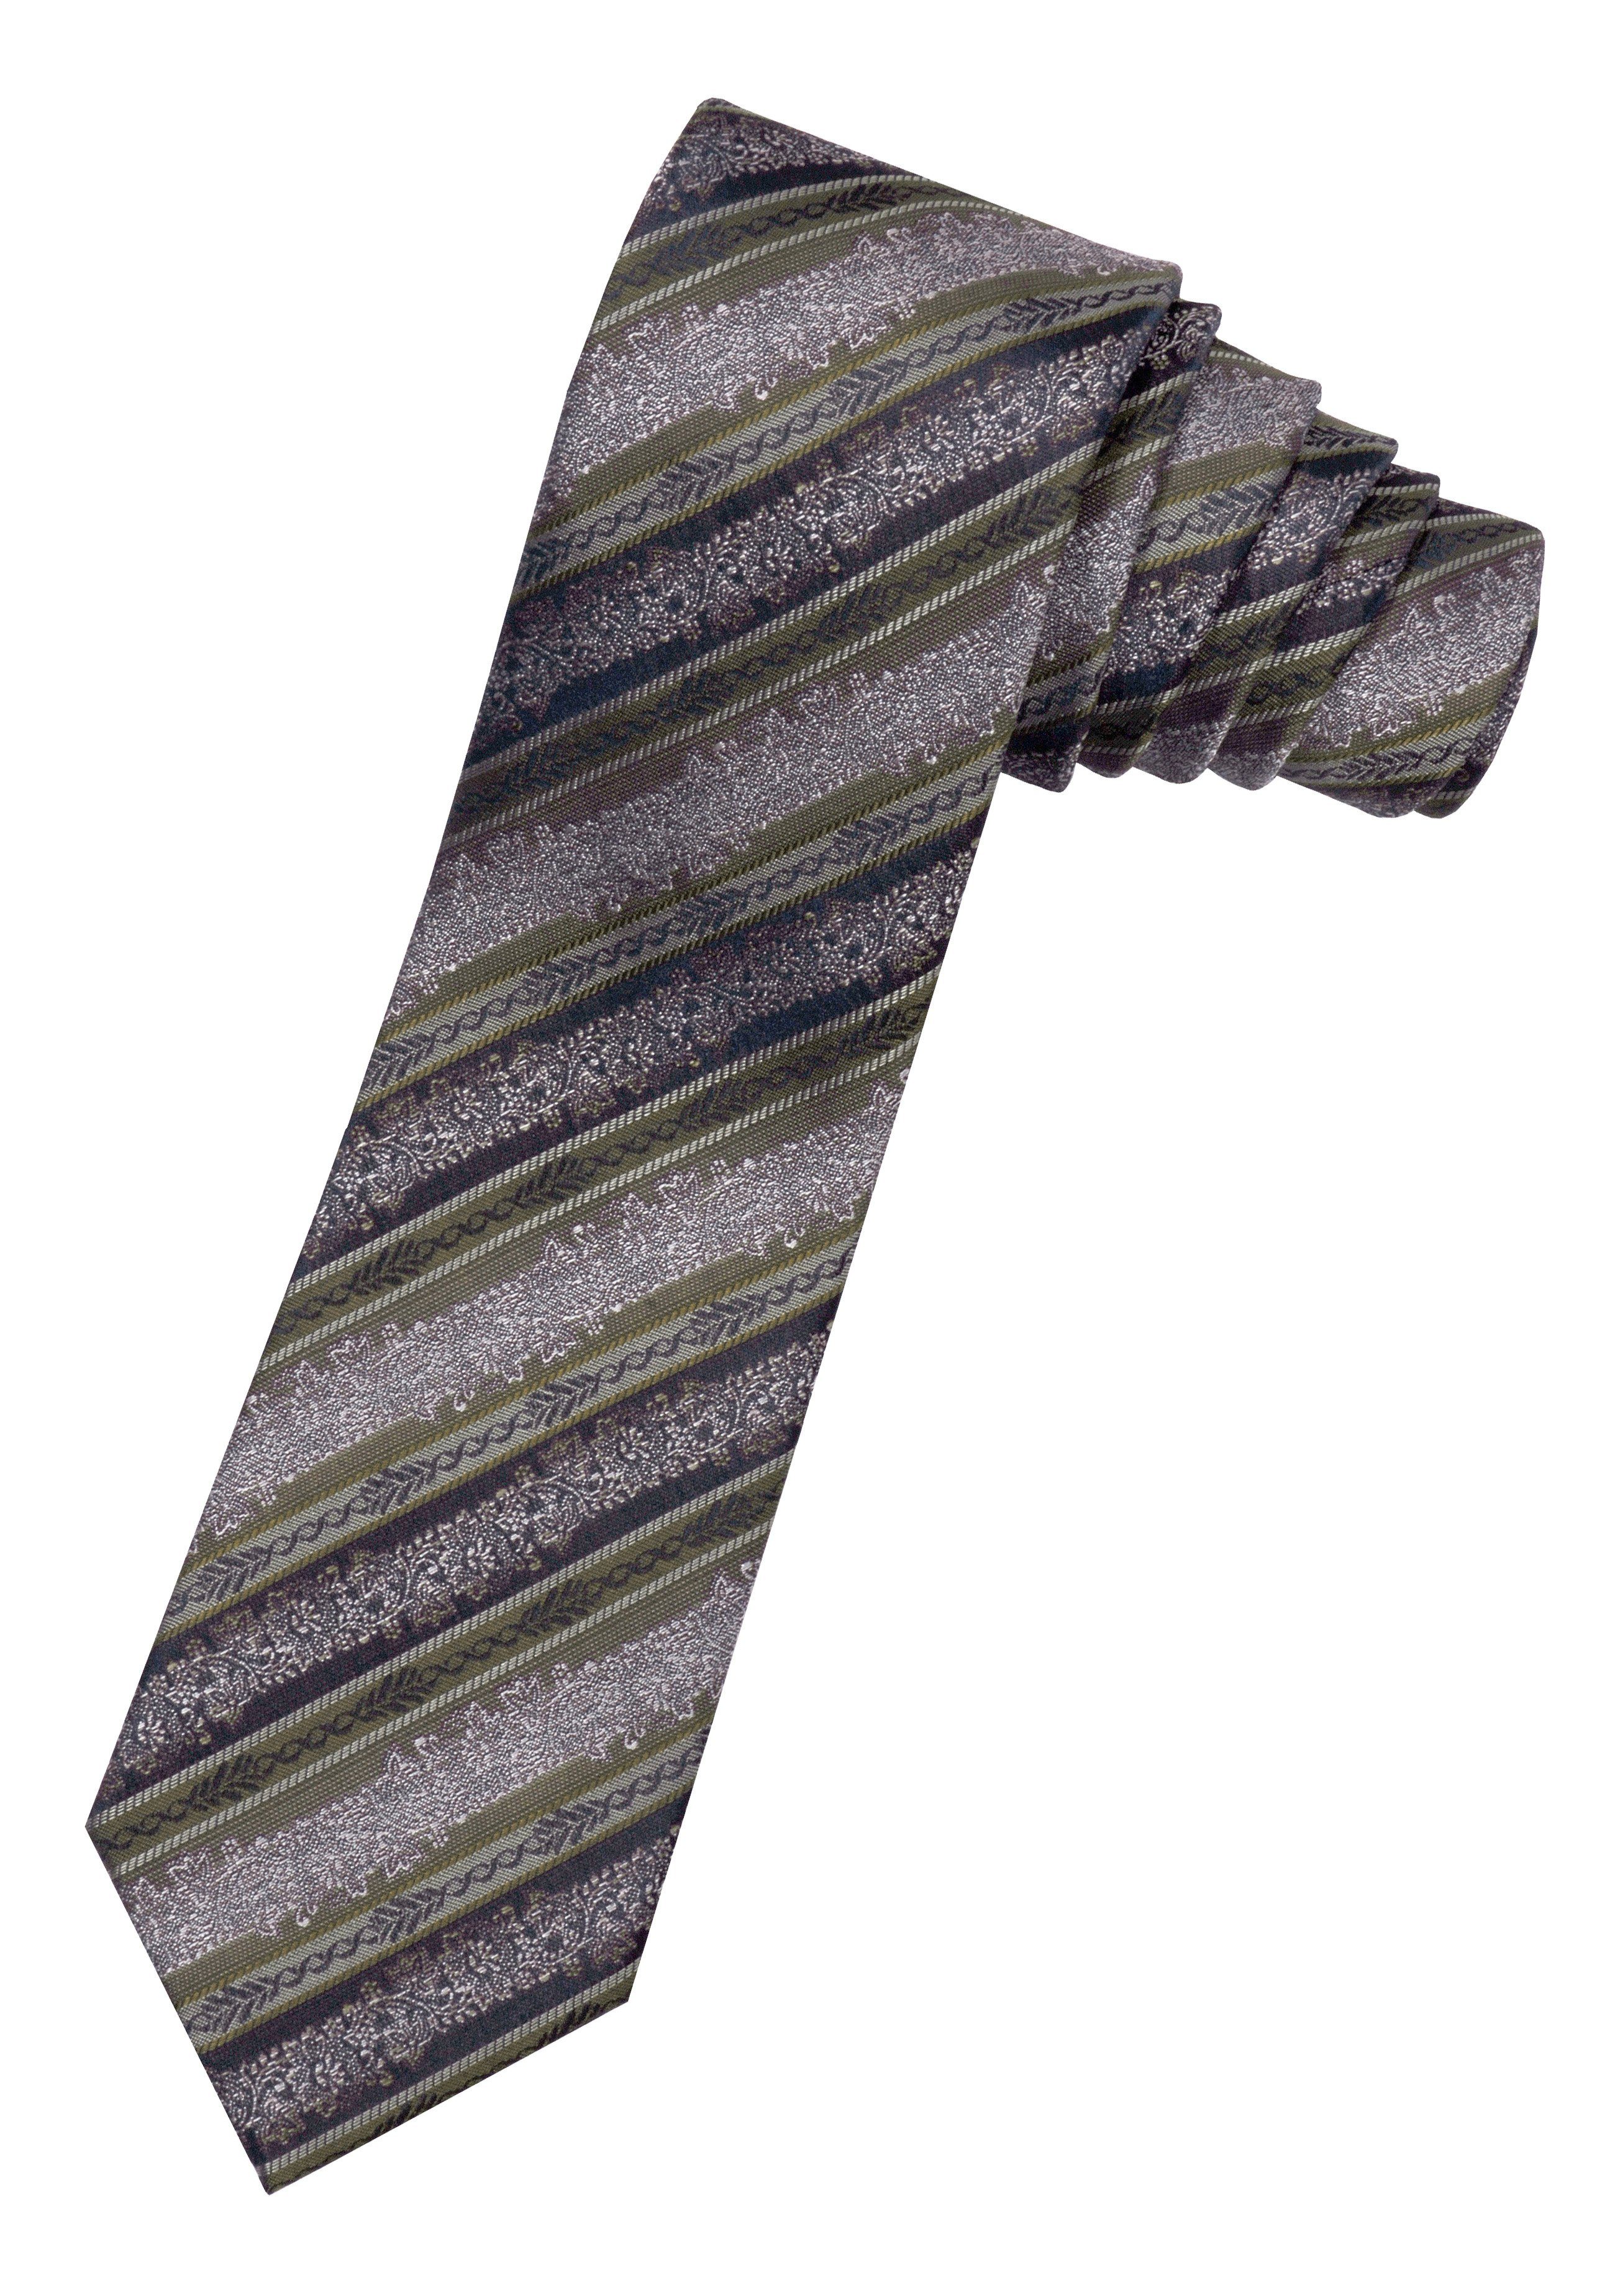 Trachtenkrawatte Krawatte Seiden-Jacquard Seide Herren Seidenkrawatte 100% edler Krawatte Herrenkrawatte Moschen-Bayern Braun-Grün Wiener